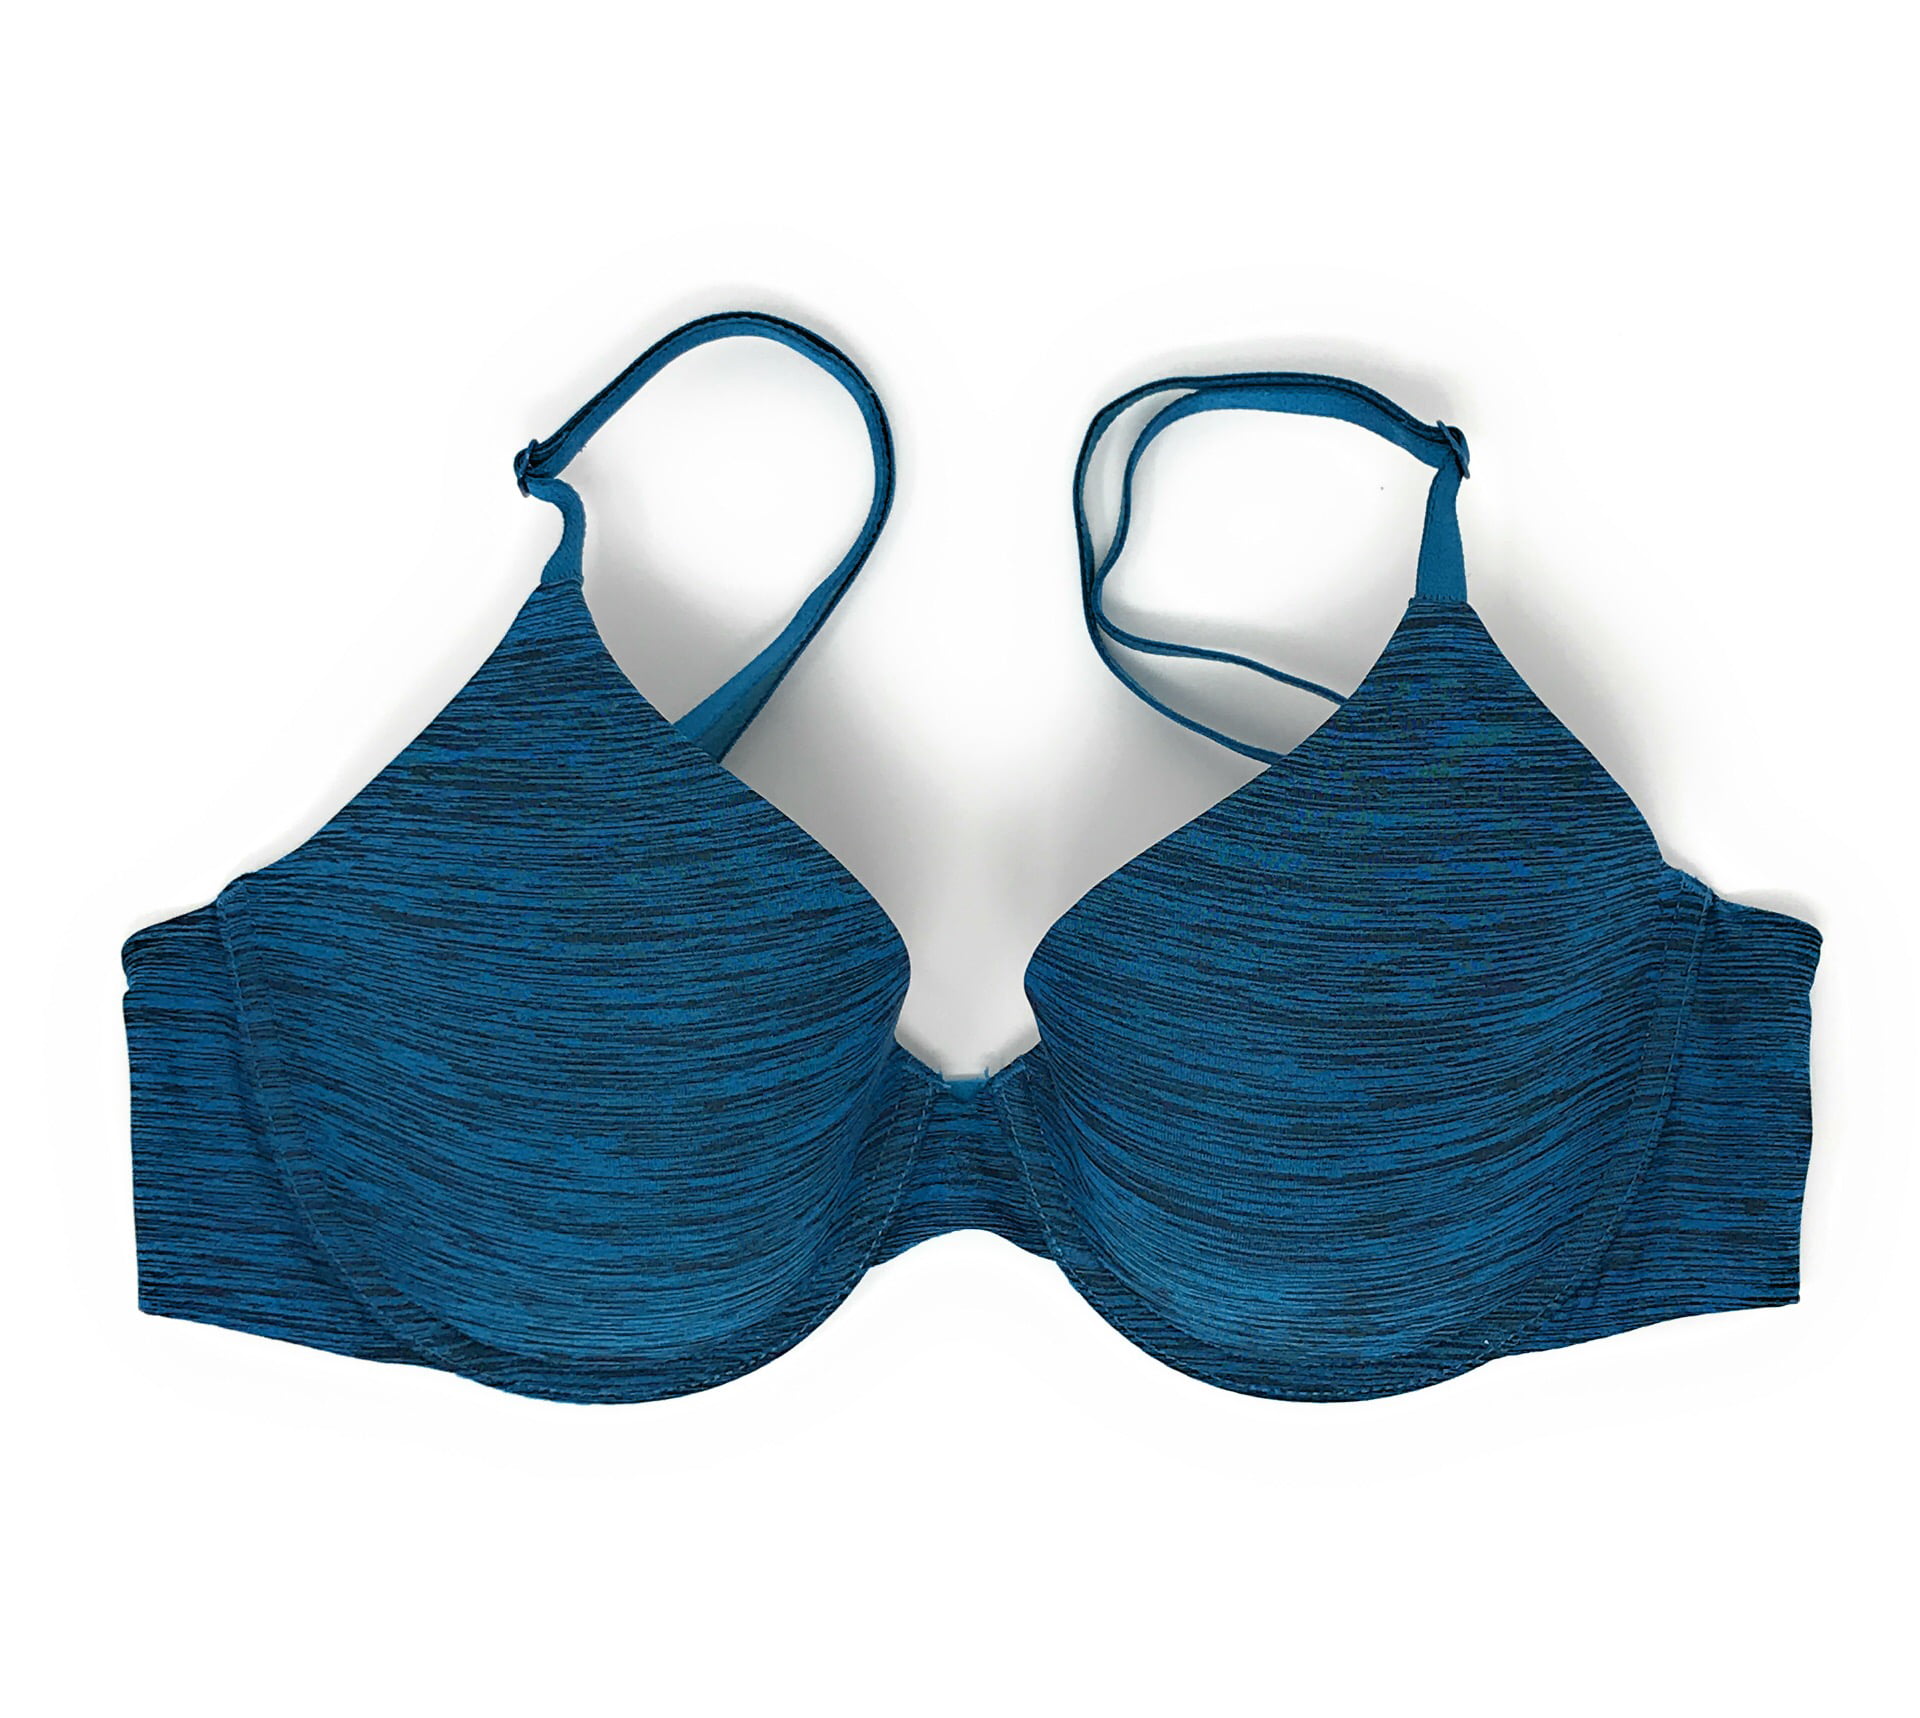 Buy Victoria's Secret Ensign Navy Blue Lace Lightly Lined Demi Bra